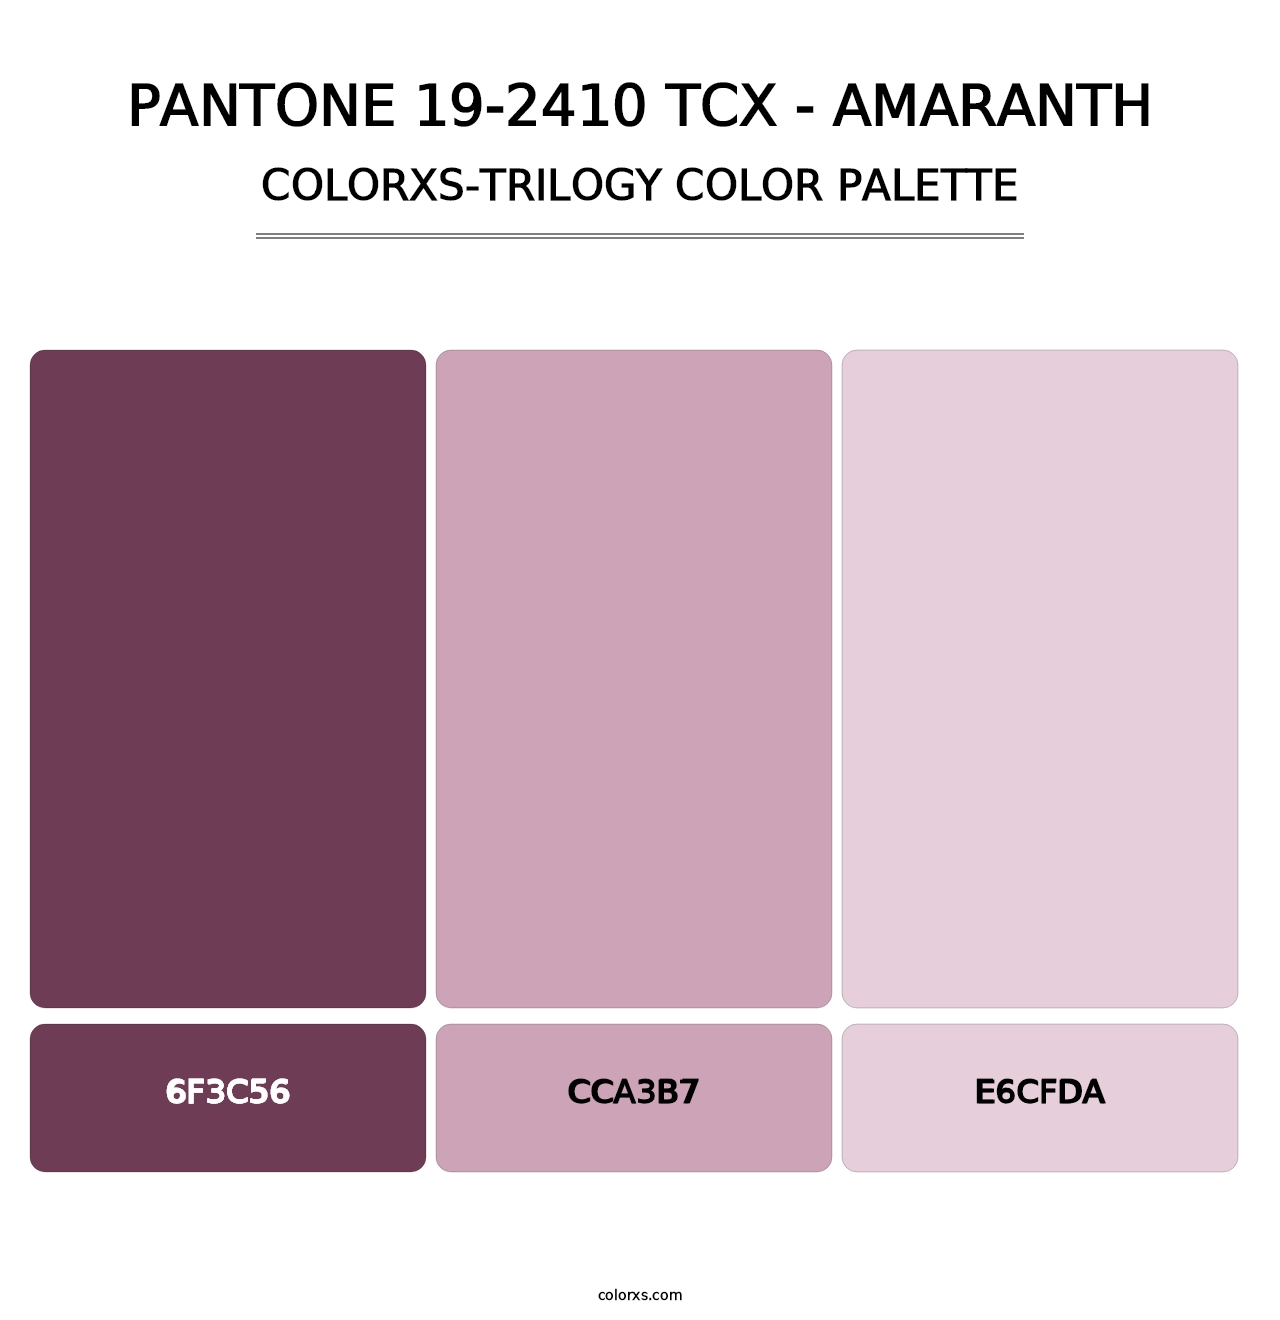 PANTONE 19-2410 TCX - Amaranth - Colorxs Trilogy Palette